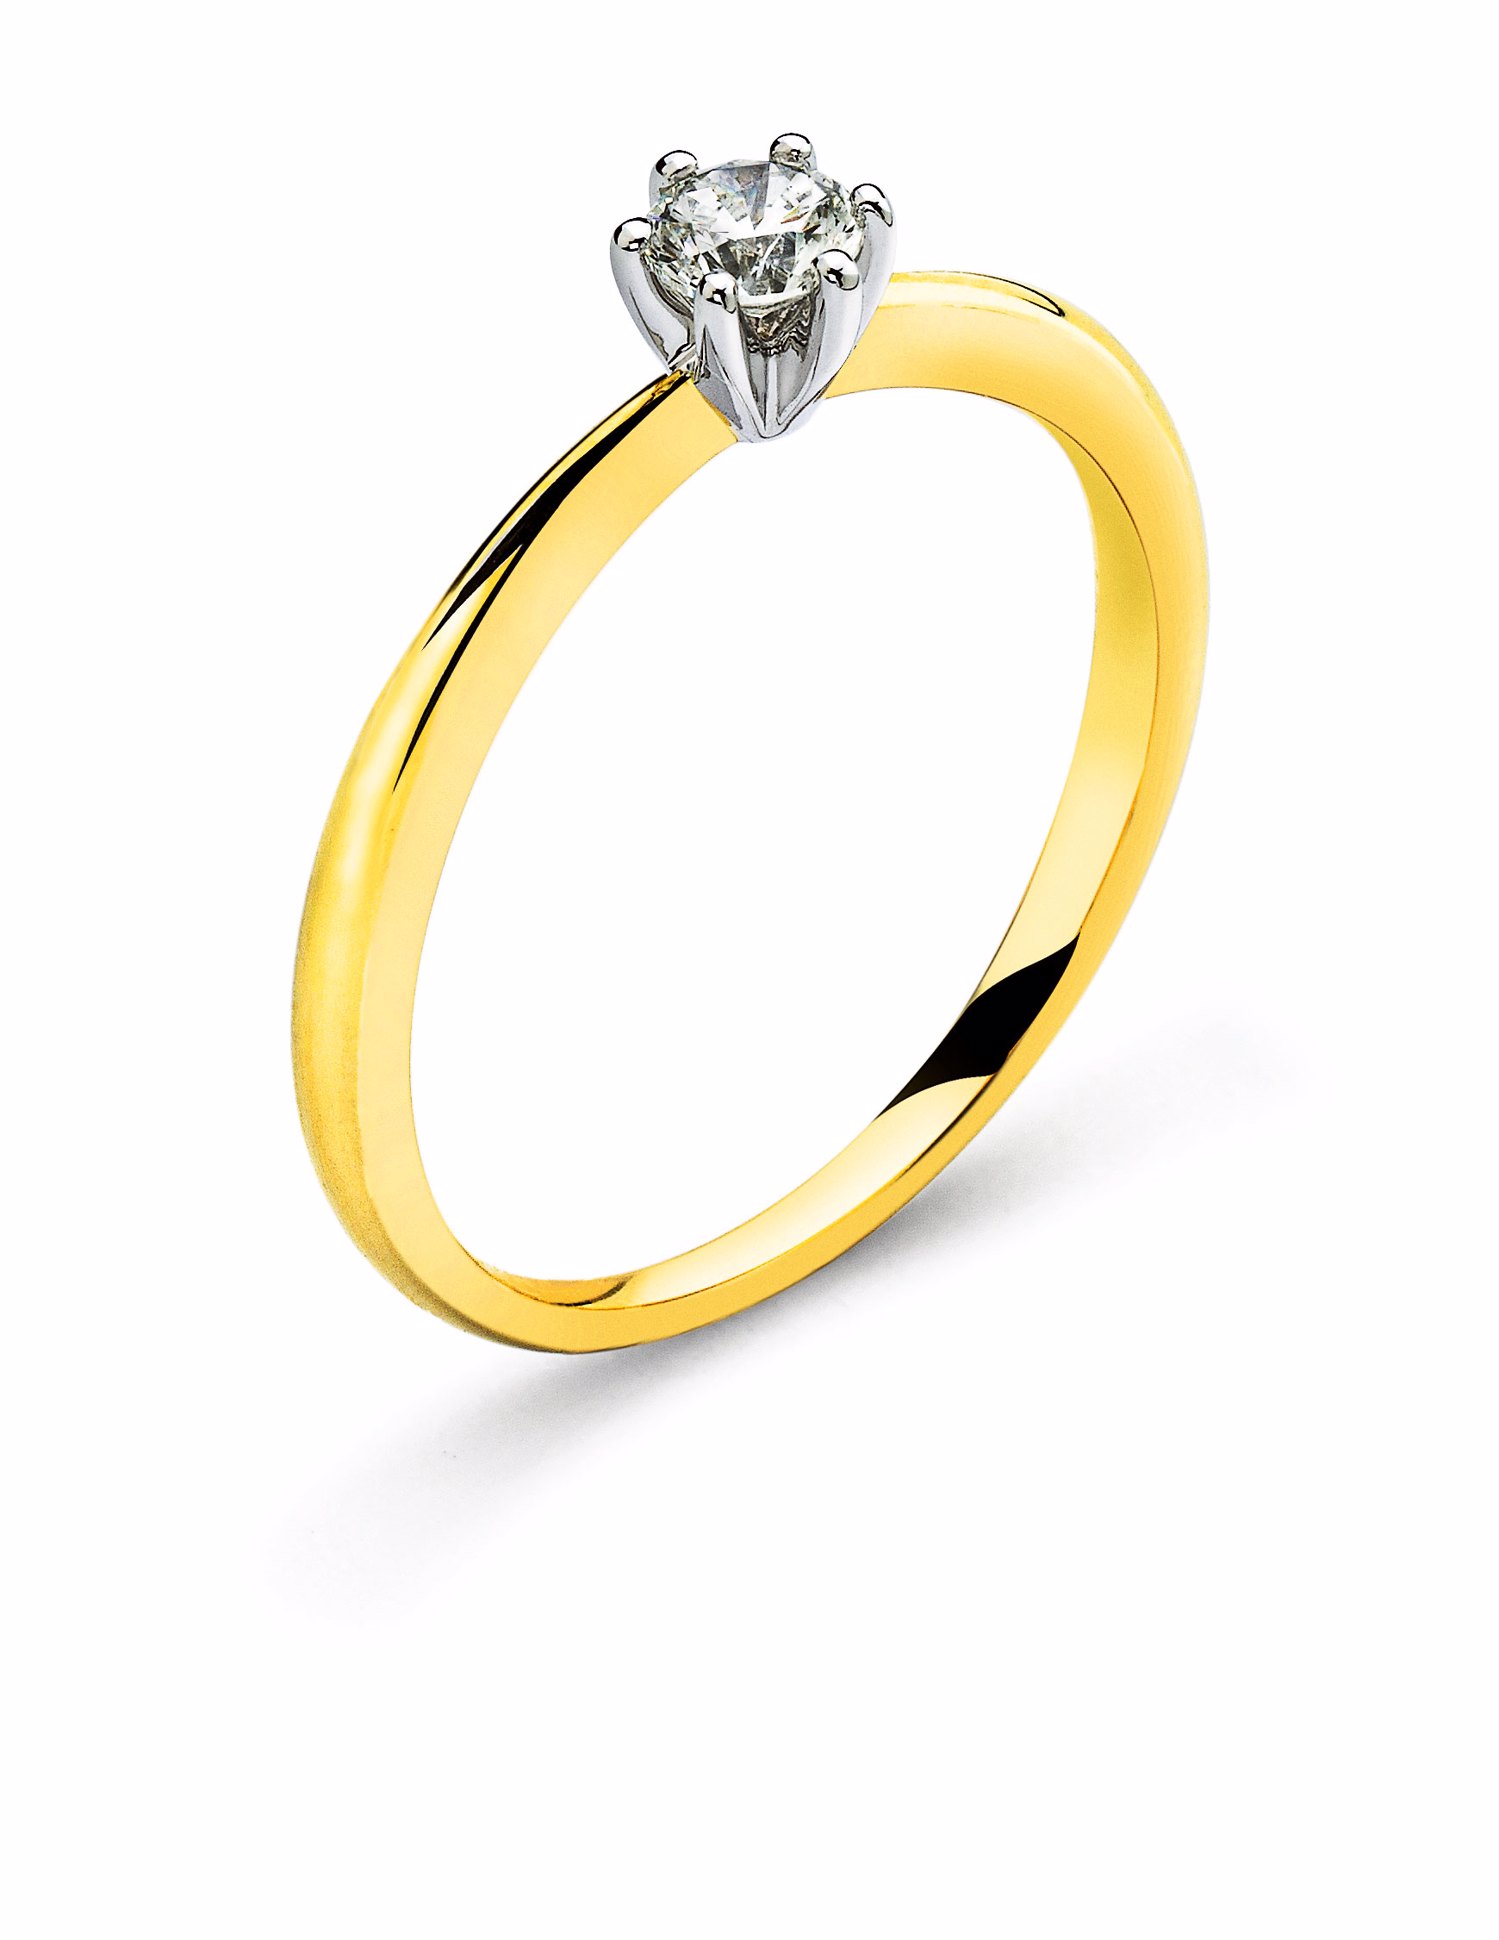 AURONOS Prestige Solitaire Ring Yellow Gold 18K, Setting White Gold Diamond 0.25ct